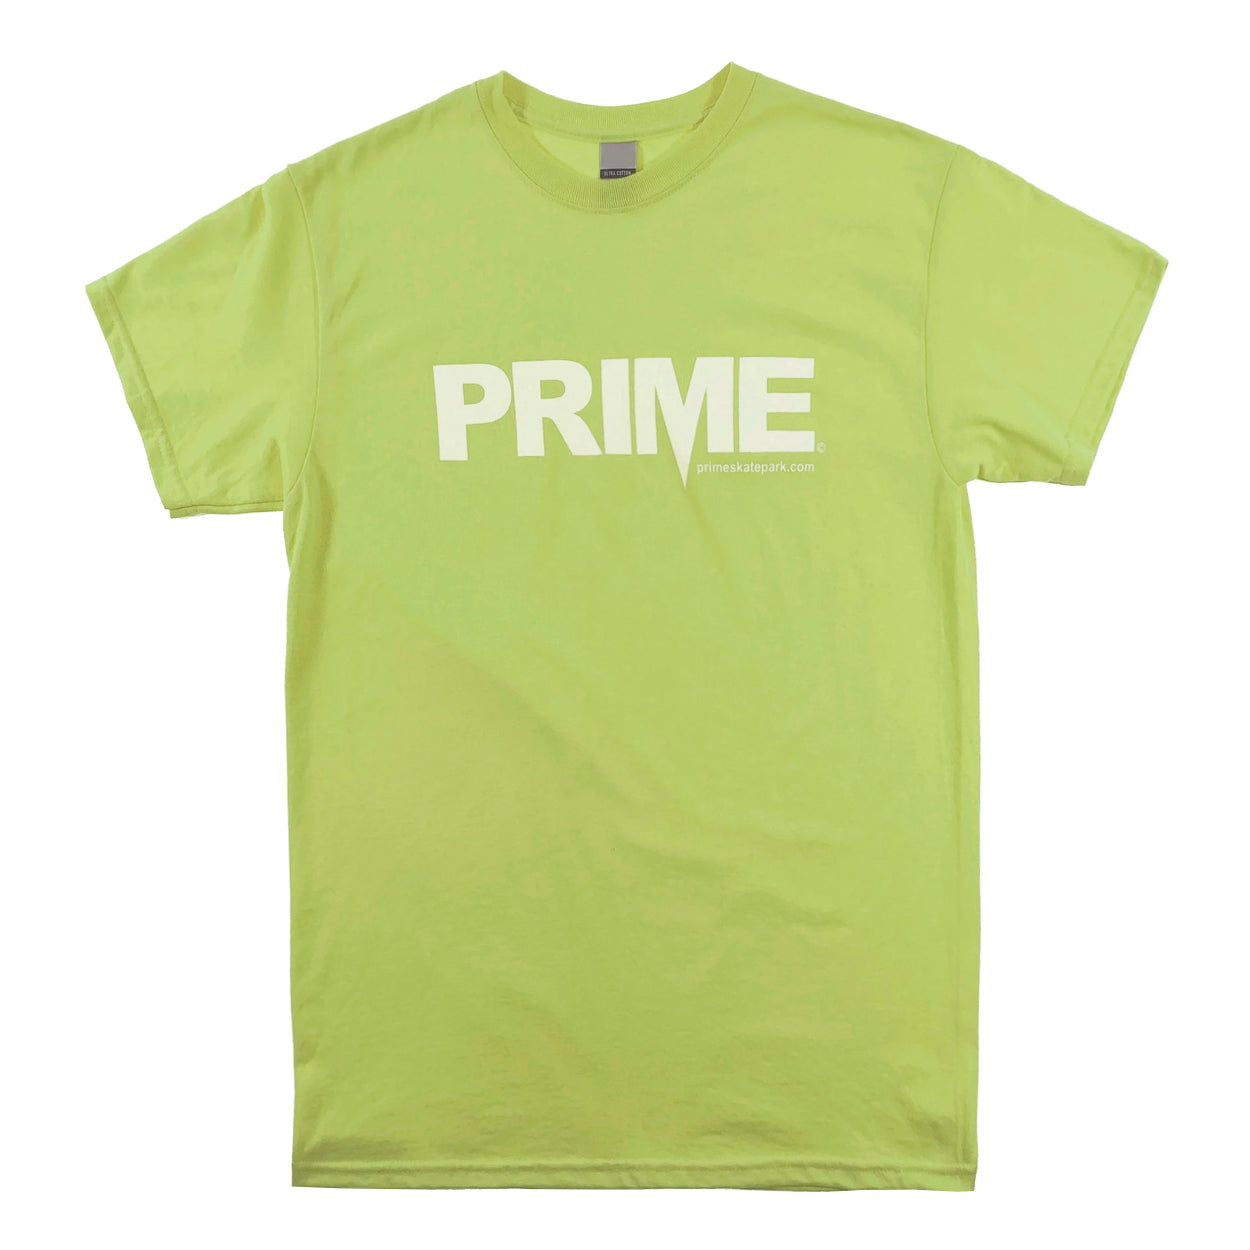 Prime Delux OG Logo T Shirt - Pistachio Green / Burnout - Prime Delux Store